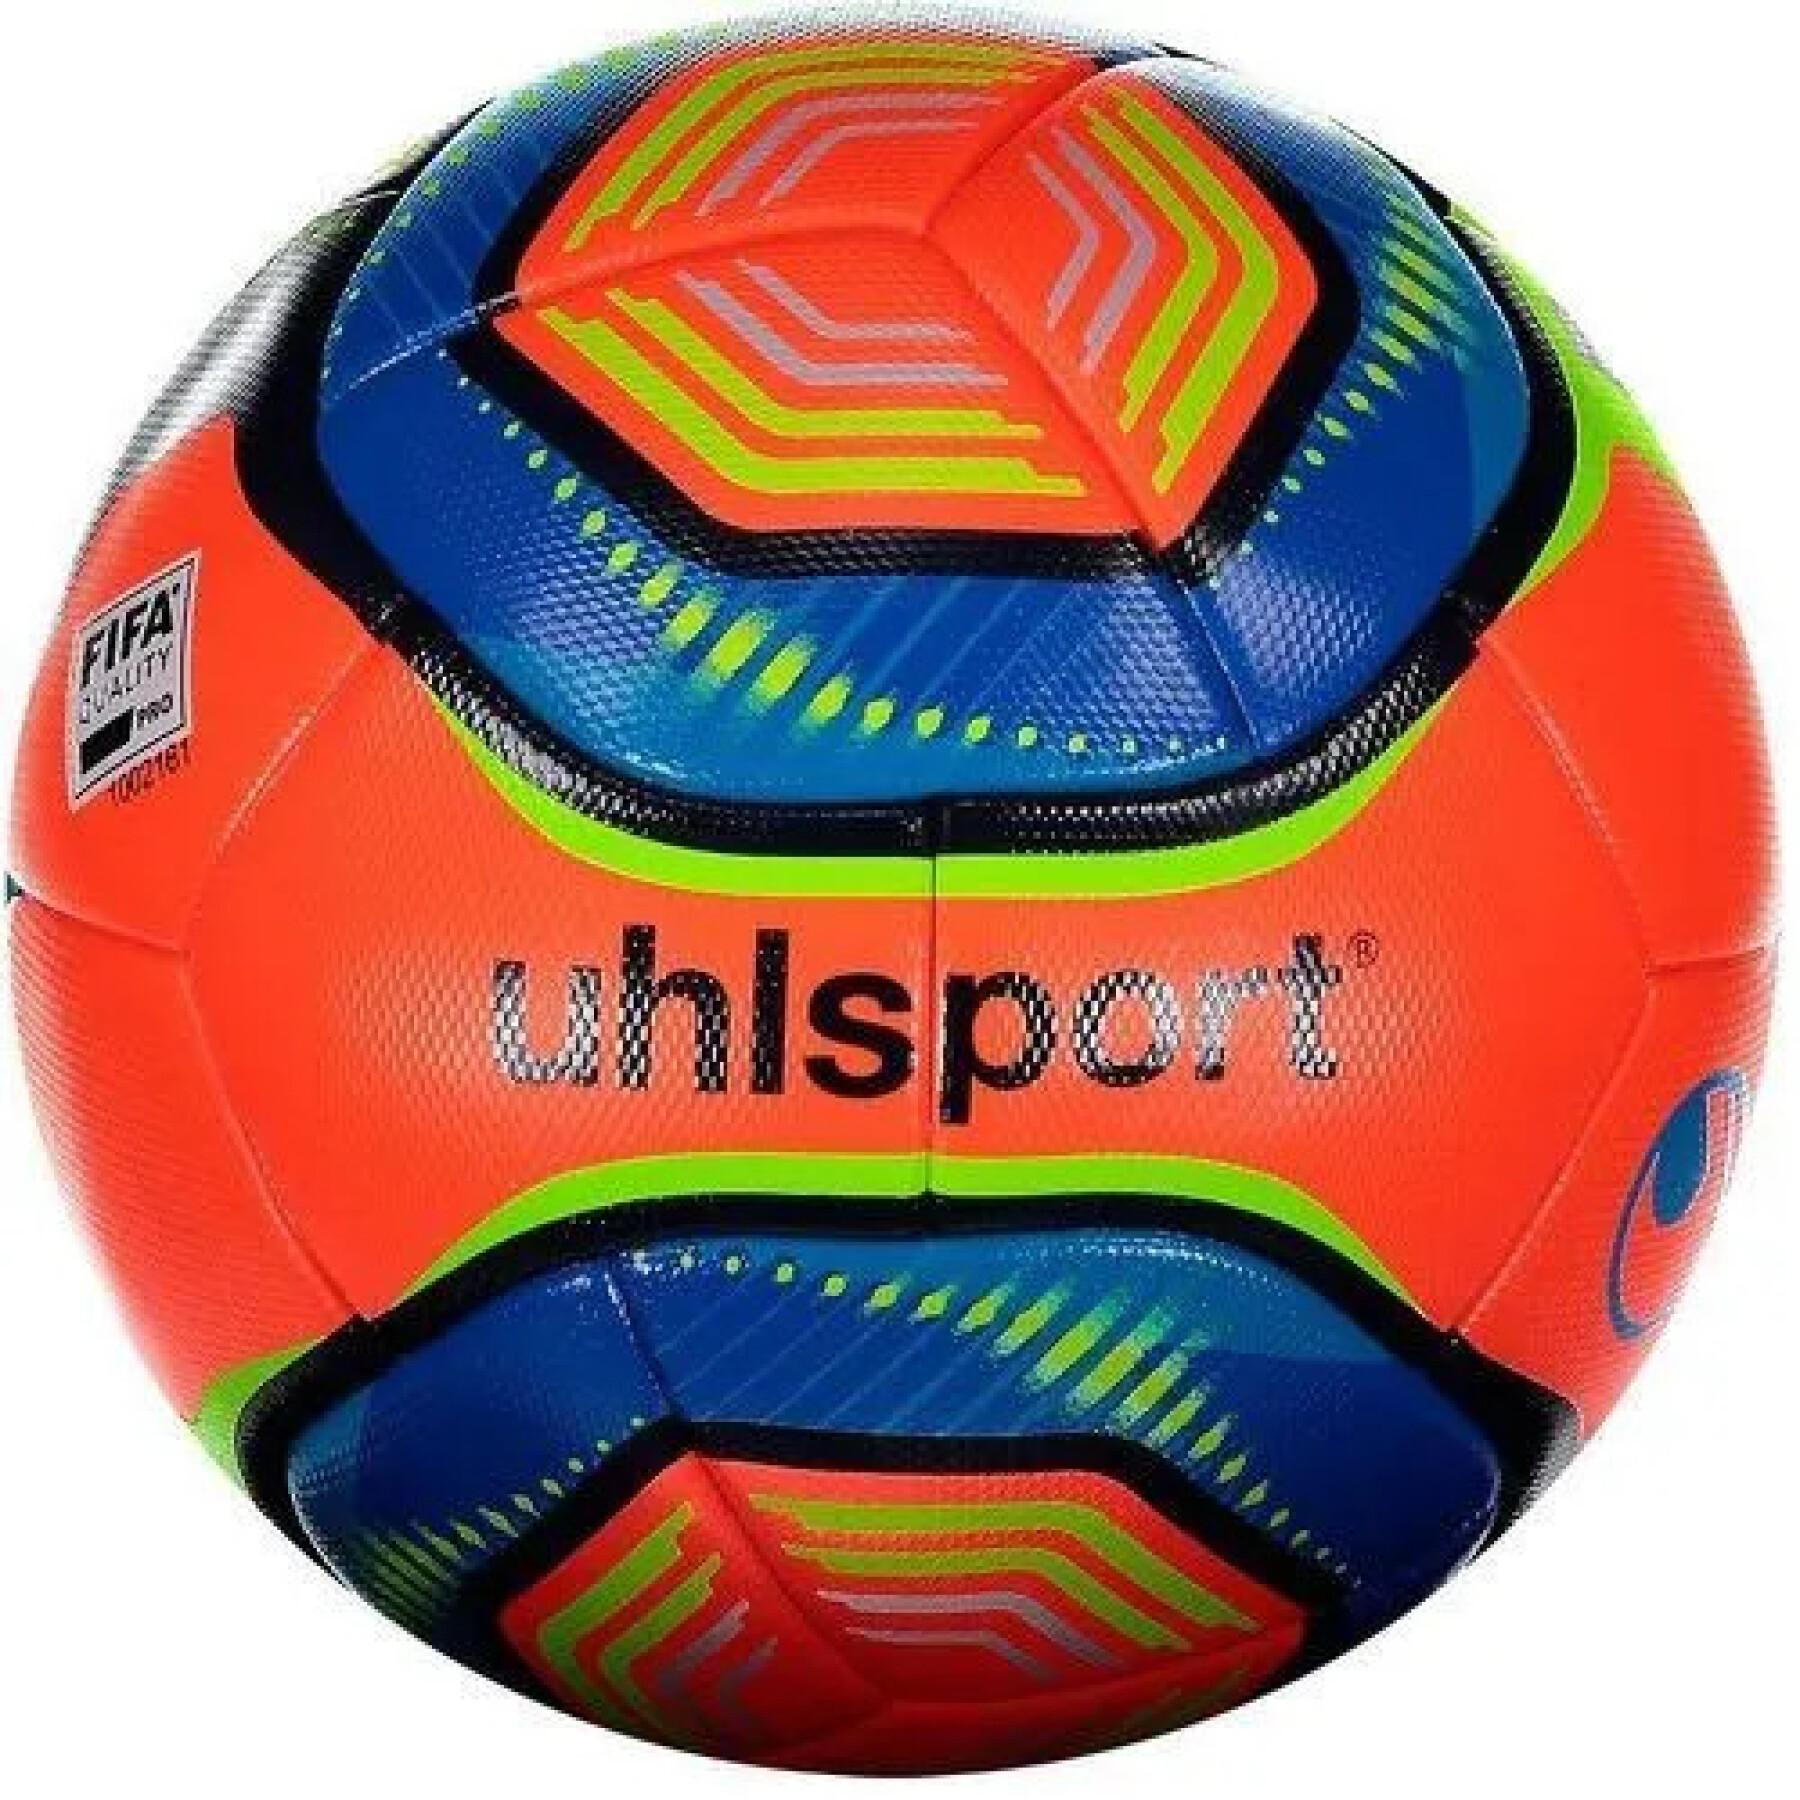 Ballong Uhlsport Elysia Officiel Hiver